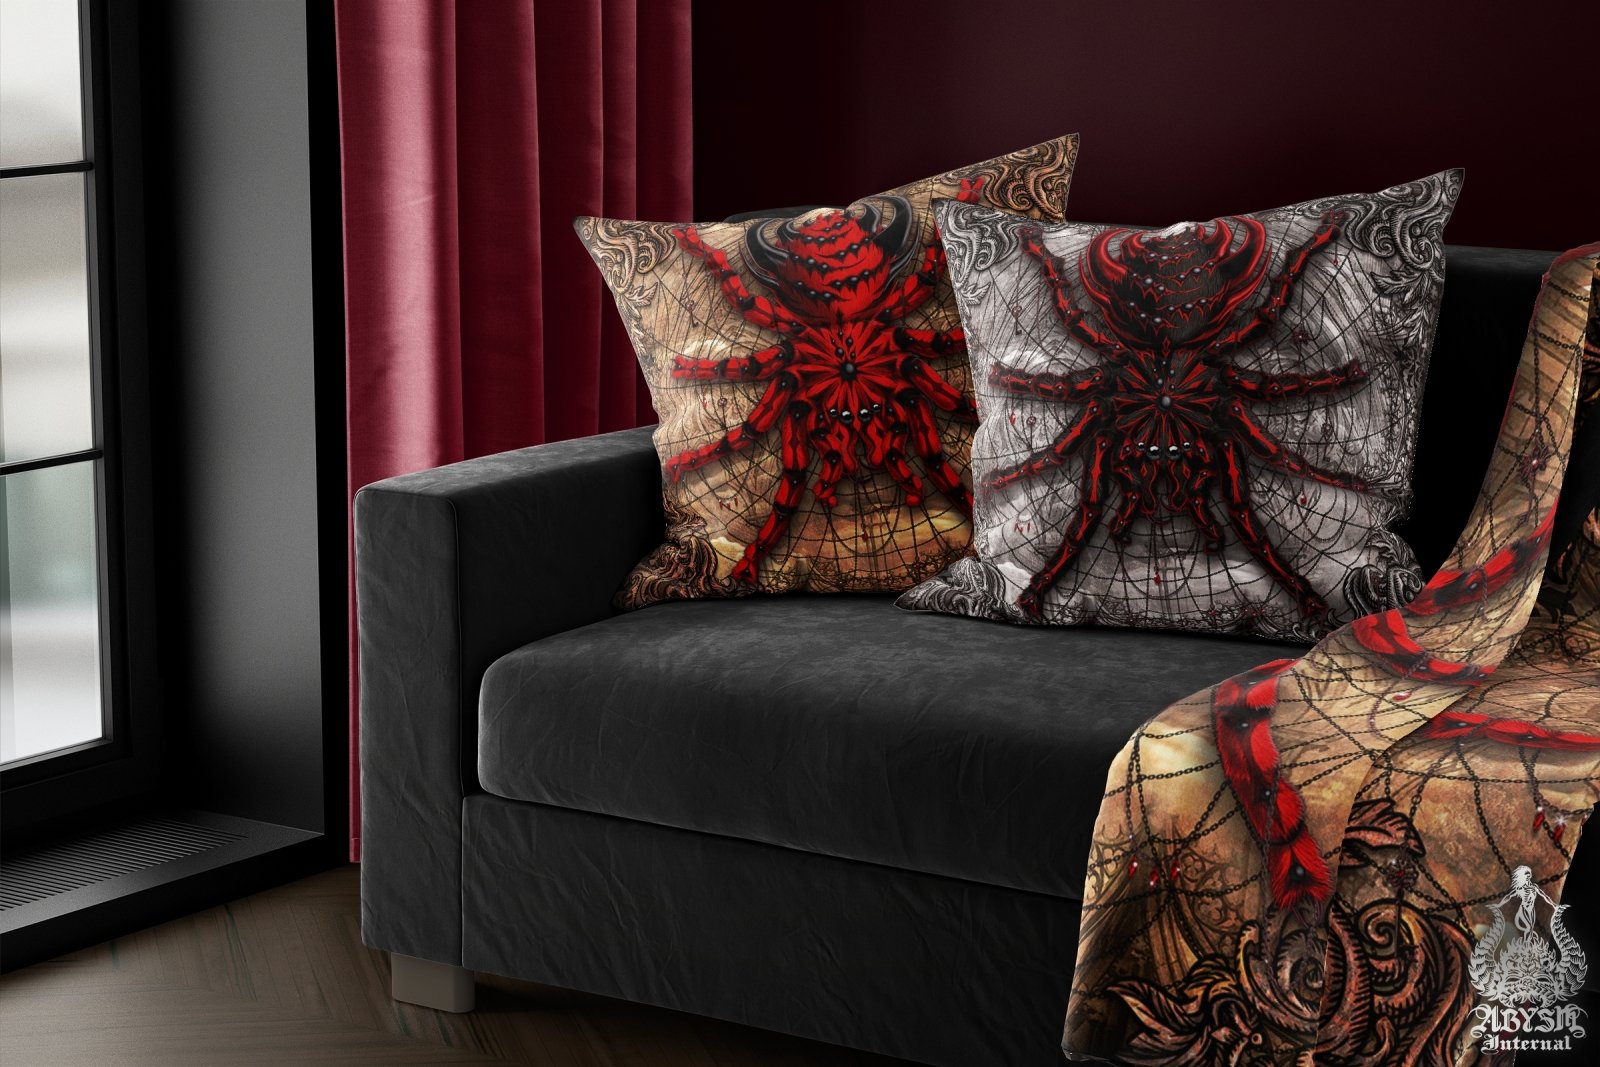 Gothic Throw Pillow, Decorative Accent Cushion, Goth Horror Room Decor, Alternative Home - Tarantula Spider, Beige - Abysm Internal